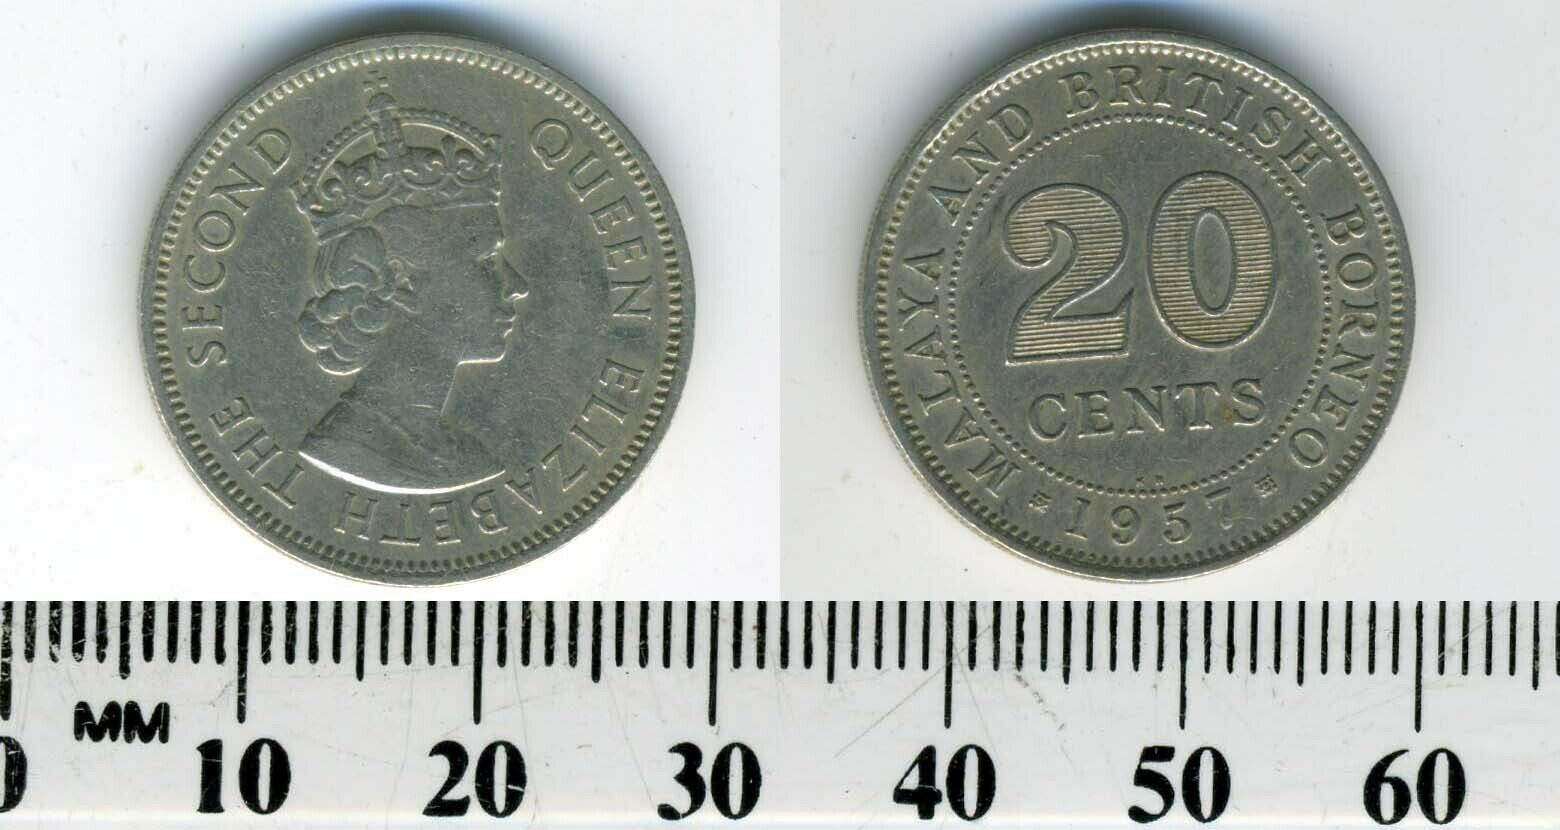 Malaya And British Borneo 1957 Kn -20 Cents Copper-nickel Coin - Elizabeth Ii